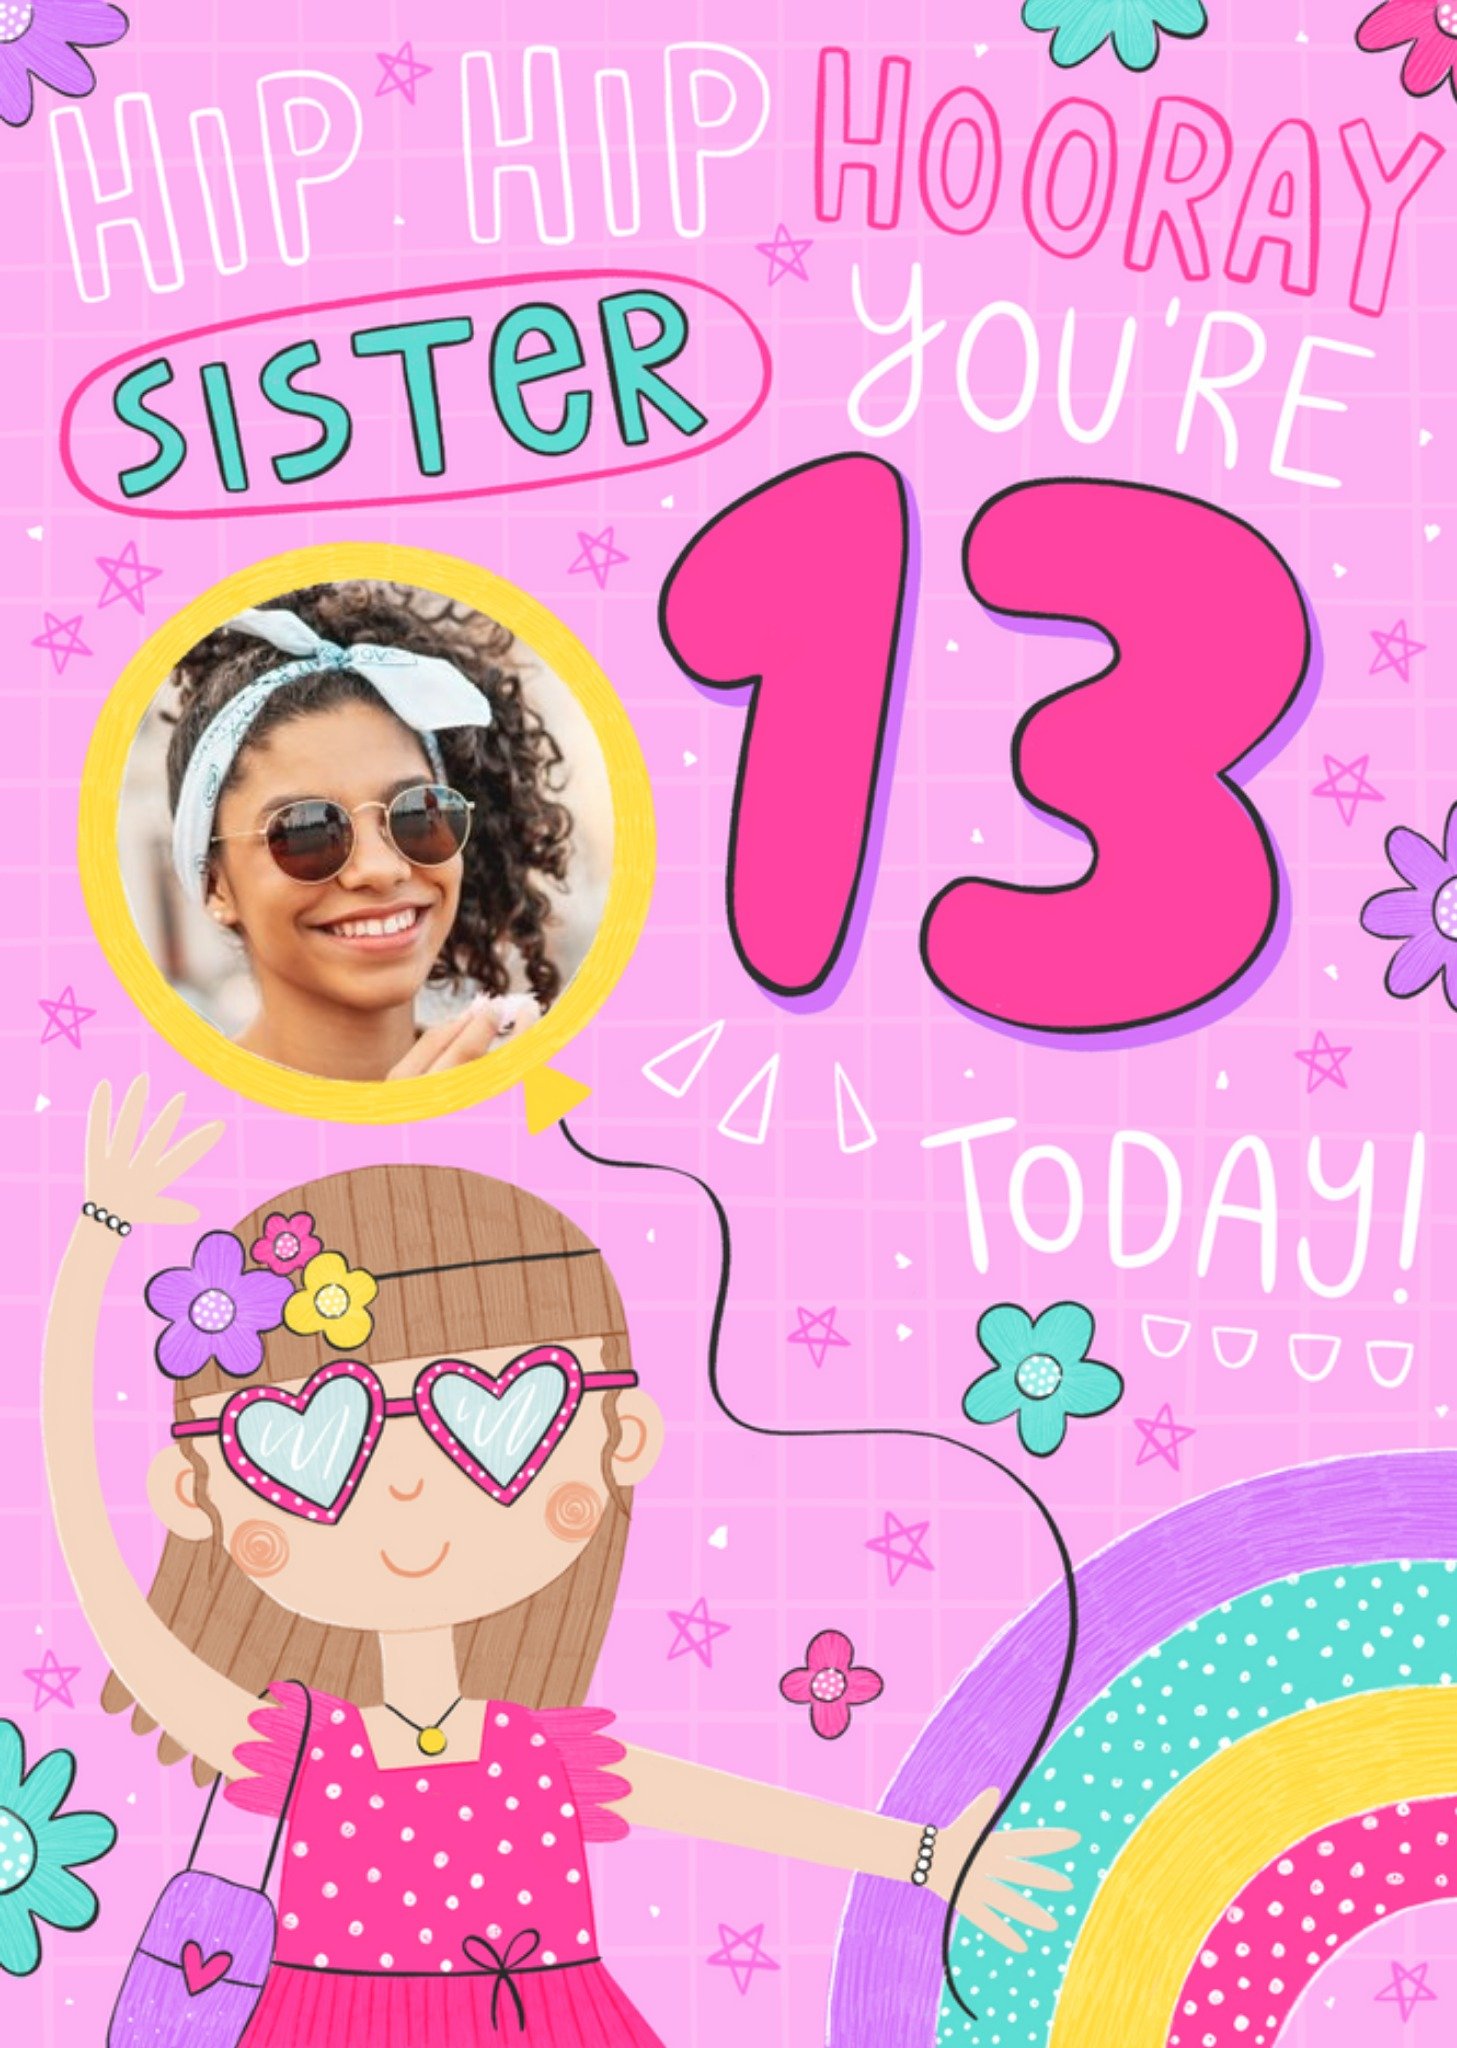 Moonpig Fun Illustration Hip Hip Hooray Sister Youre 13 Today Birthday Card, Large